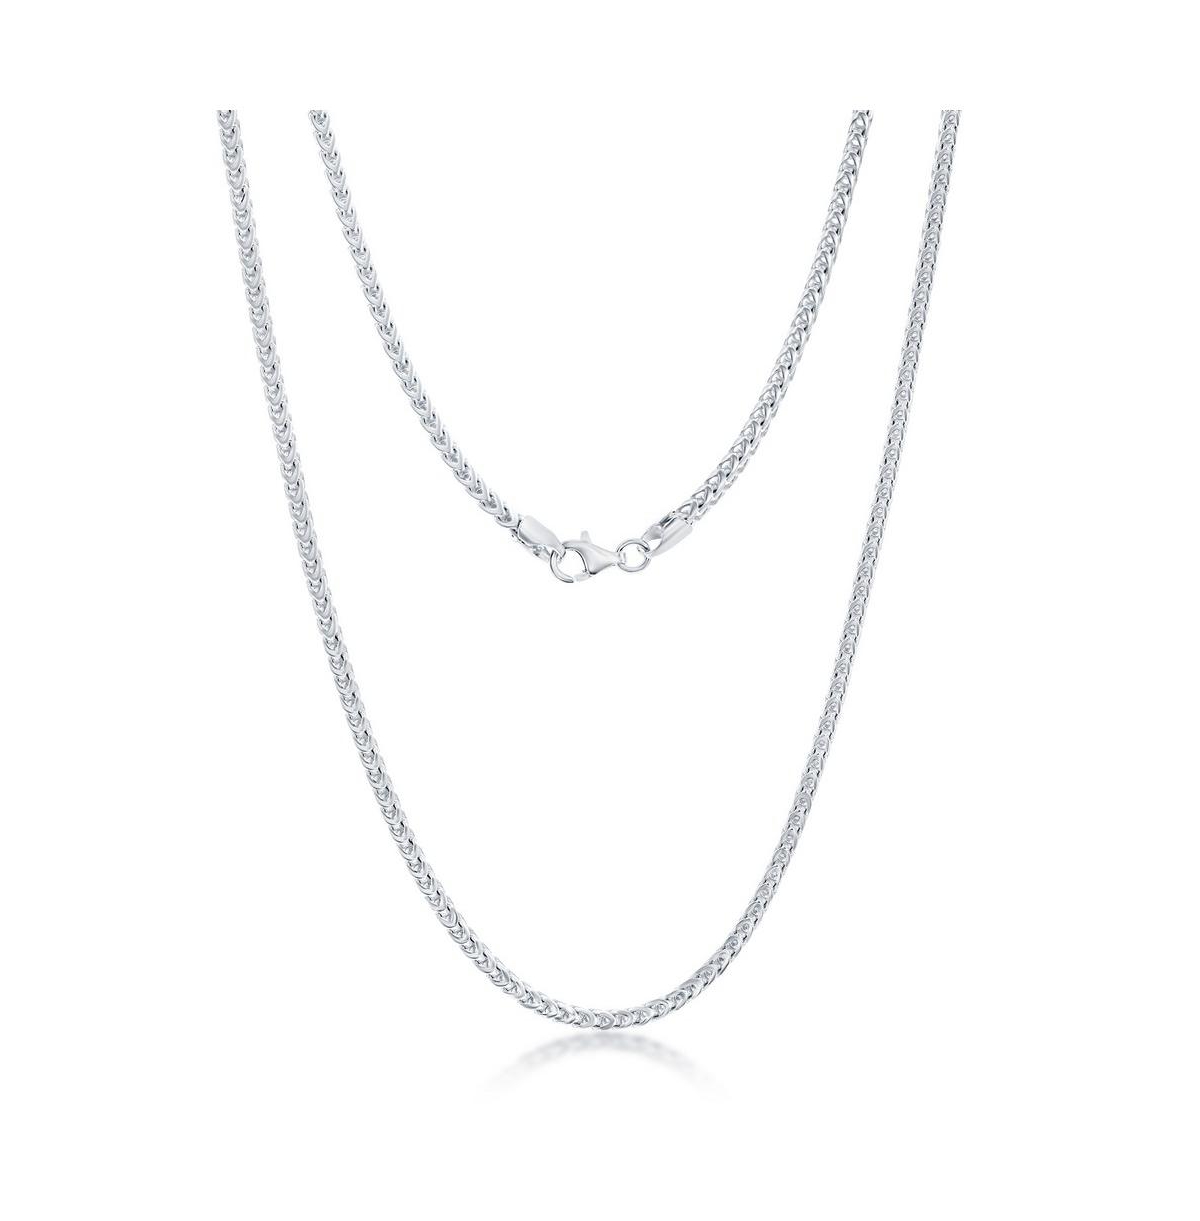 Diamond cut Franco Chain 2.5mm Sterling Silver 30" Necklace - Silver